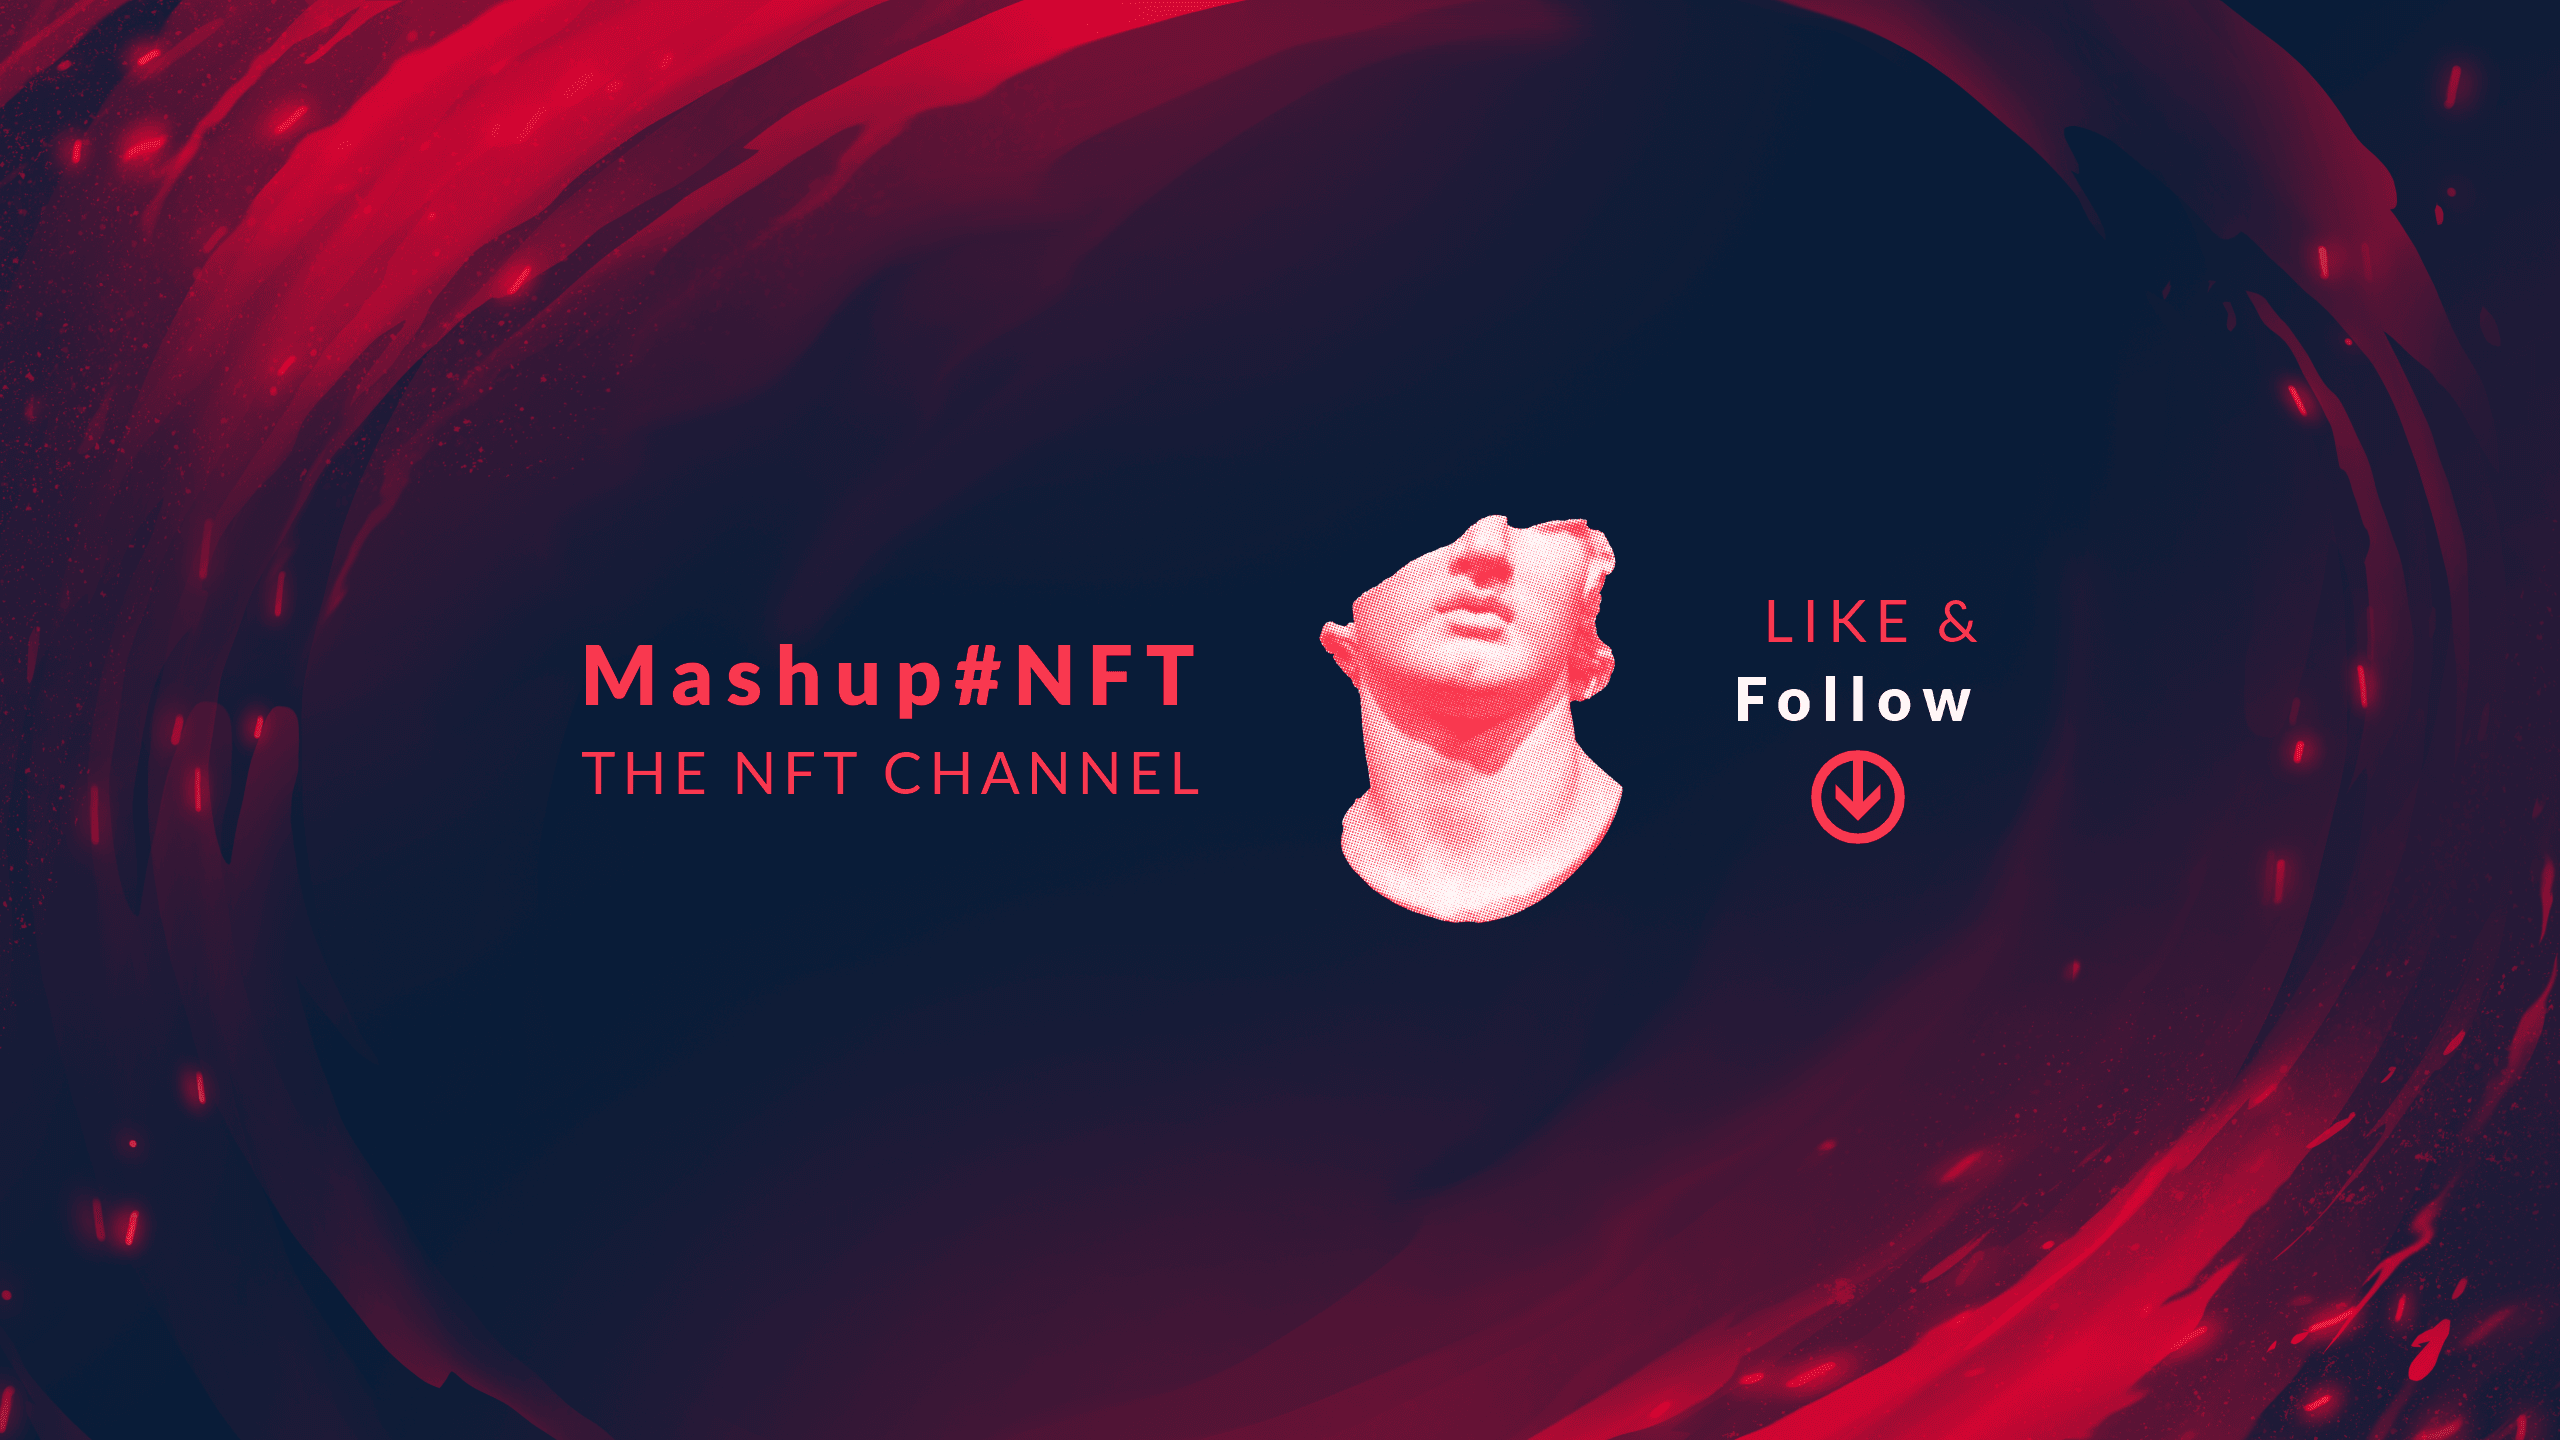 Mashup_NFT banner